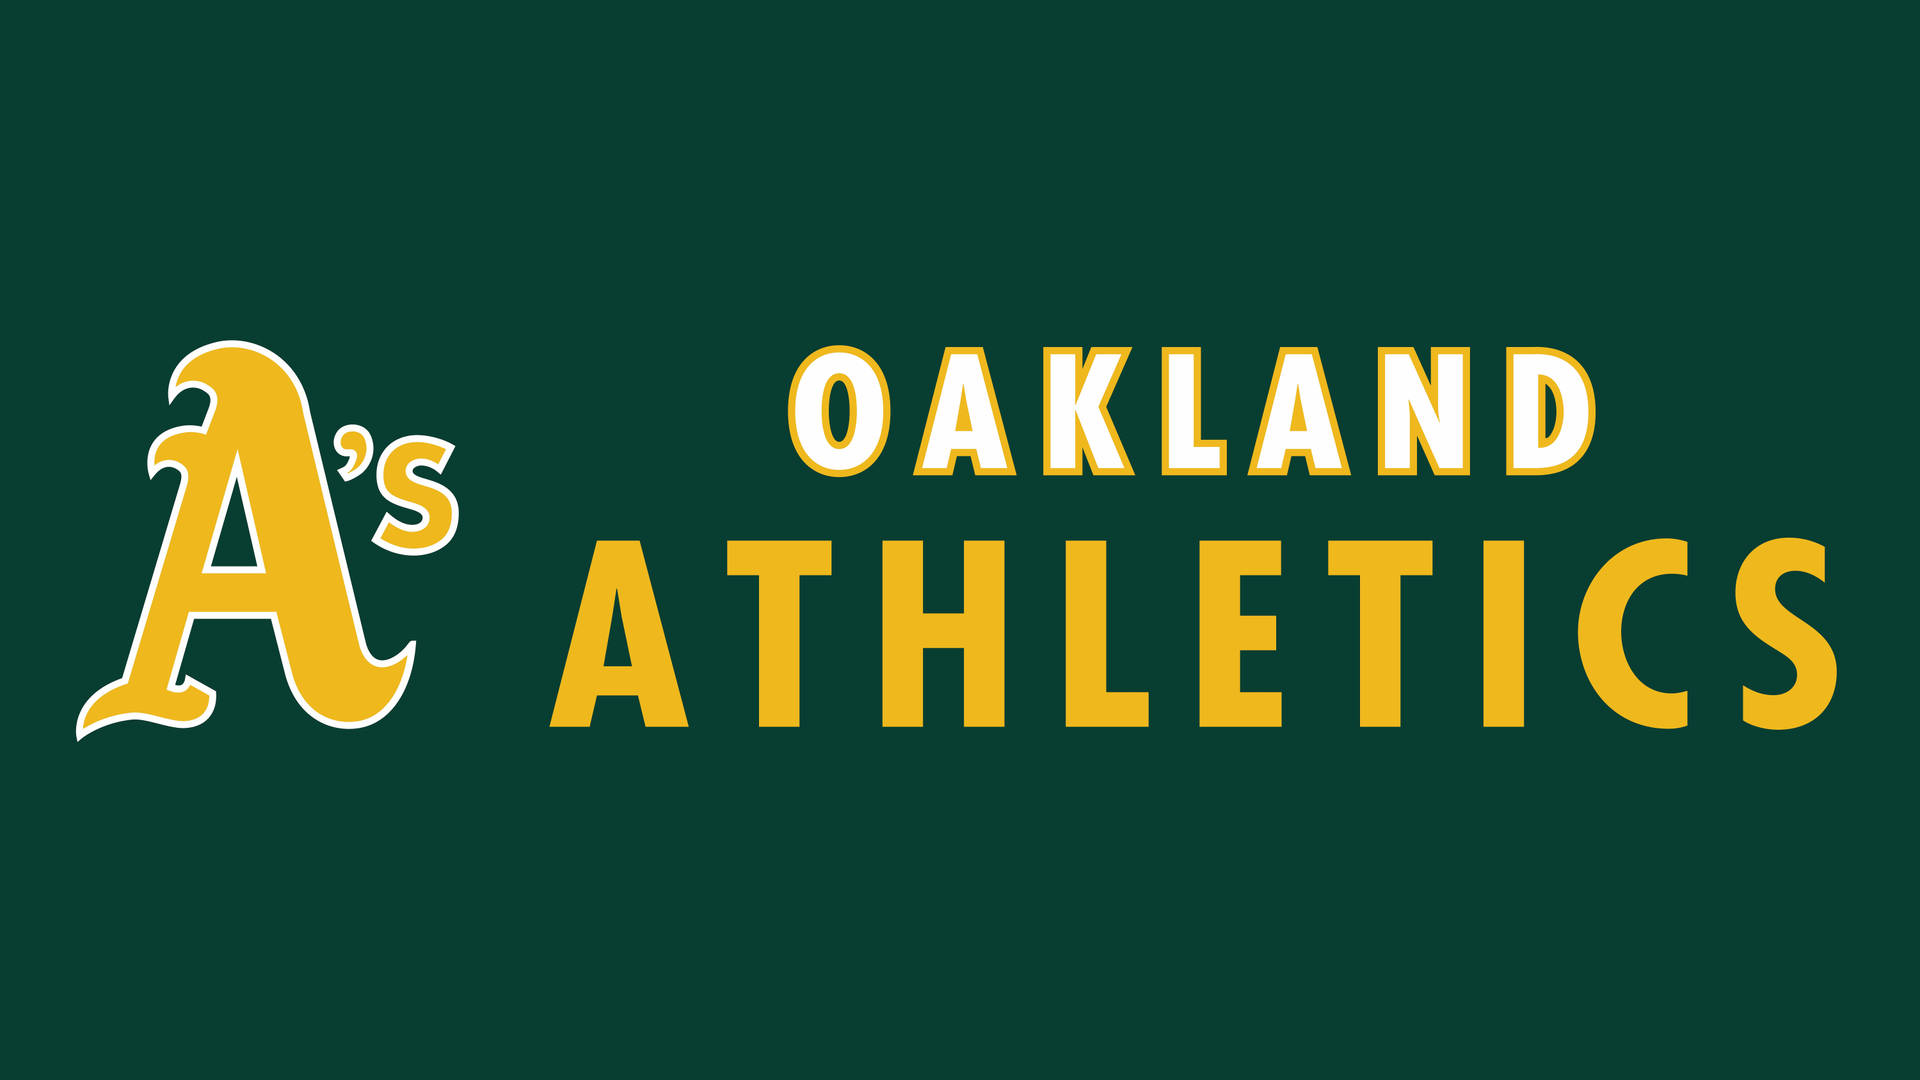 100+] Oakland Athletics Wallpapers